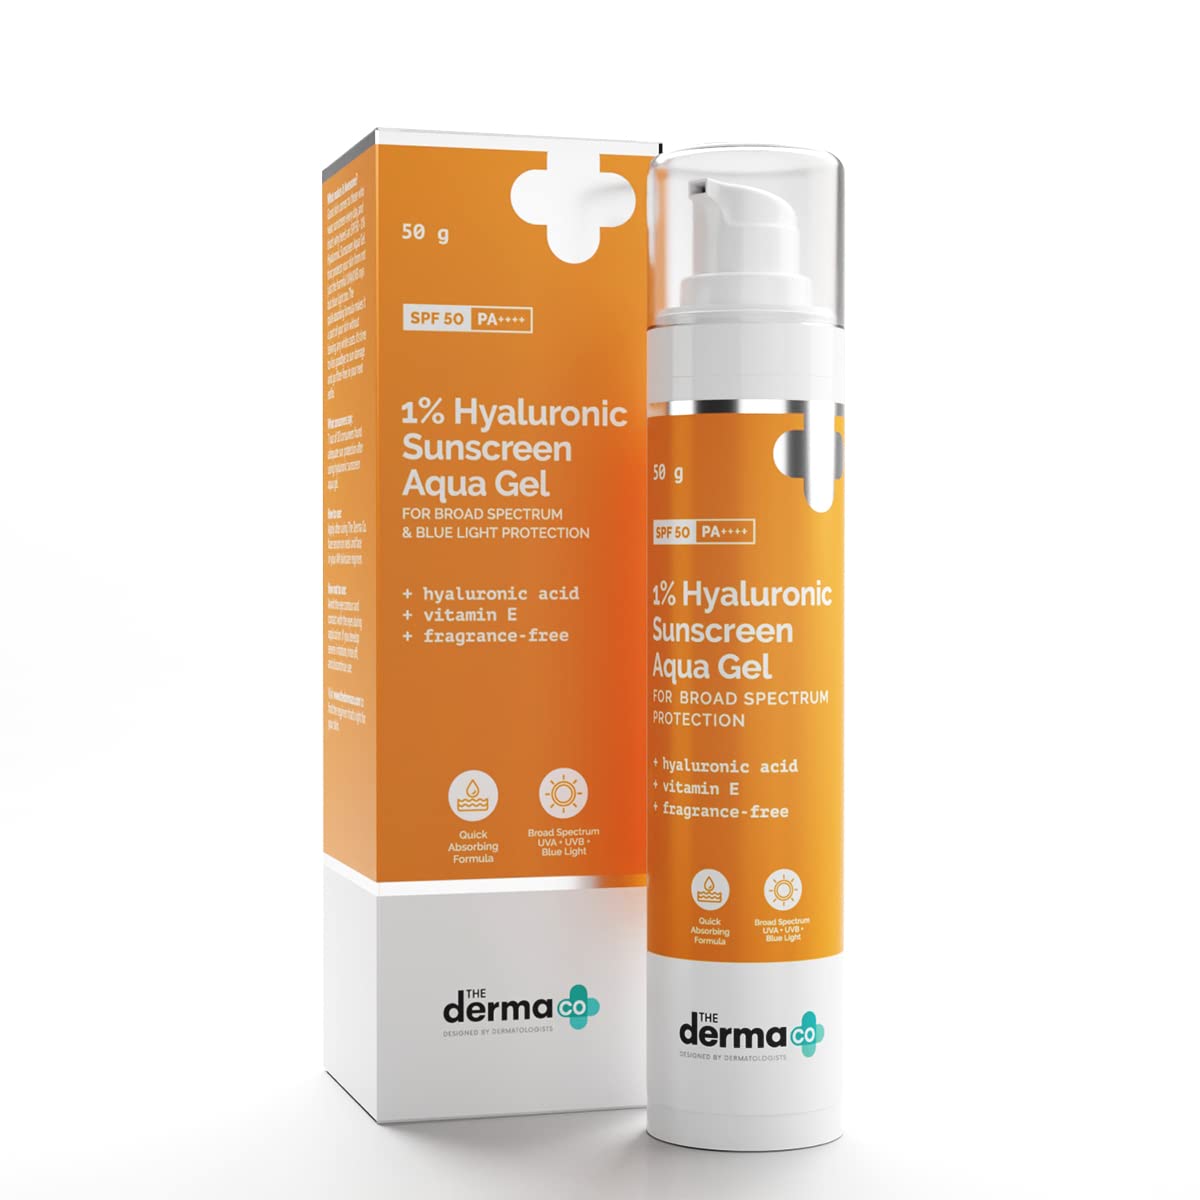  The Derma Co Hyaluronic Sunscreen SPF 50+++